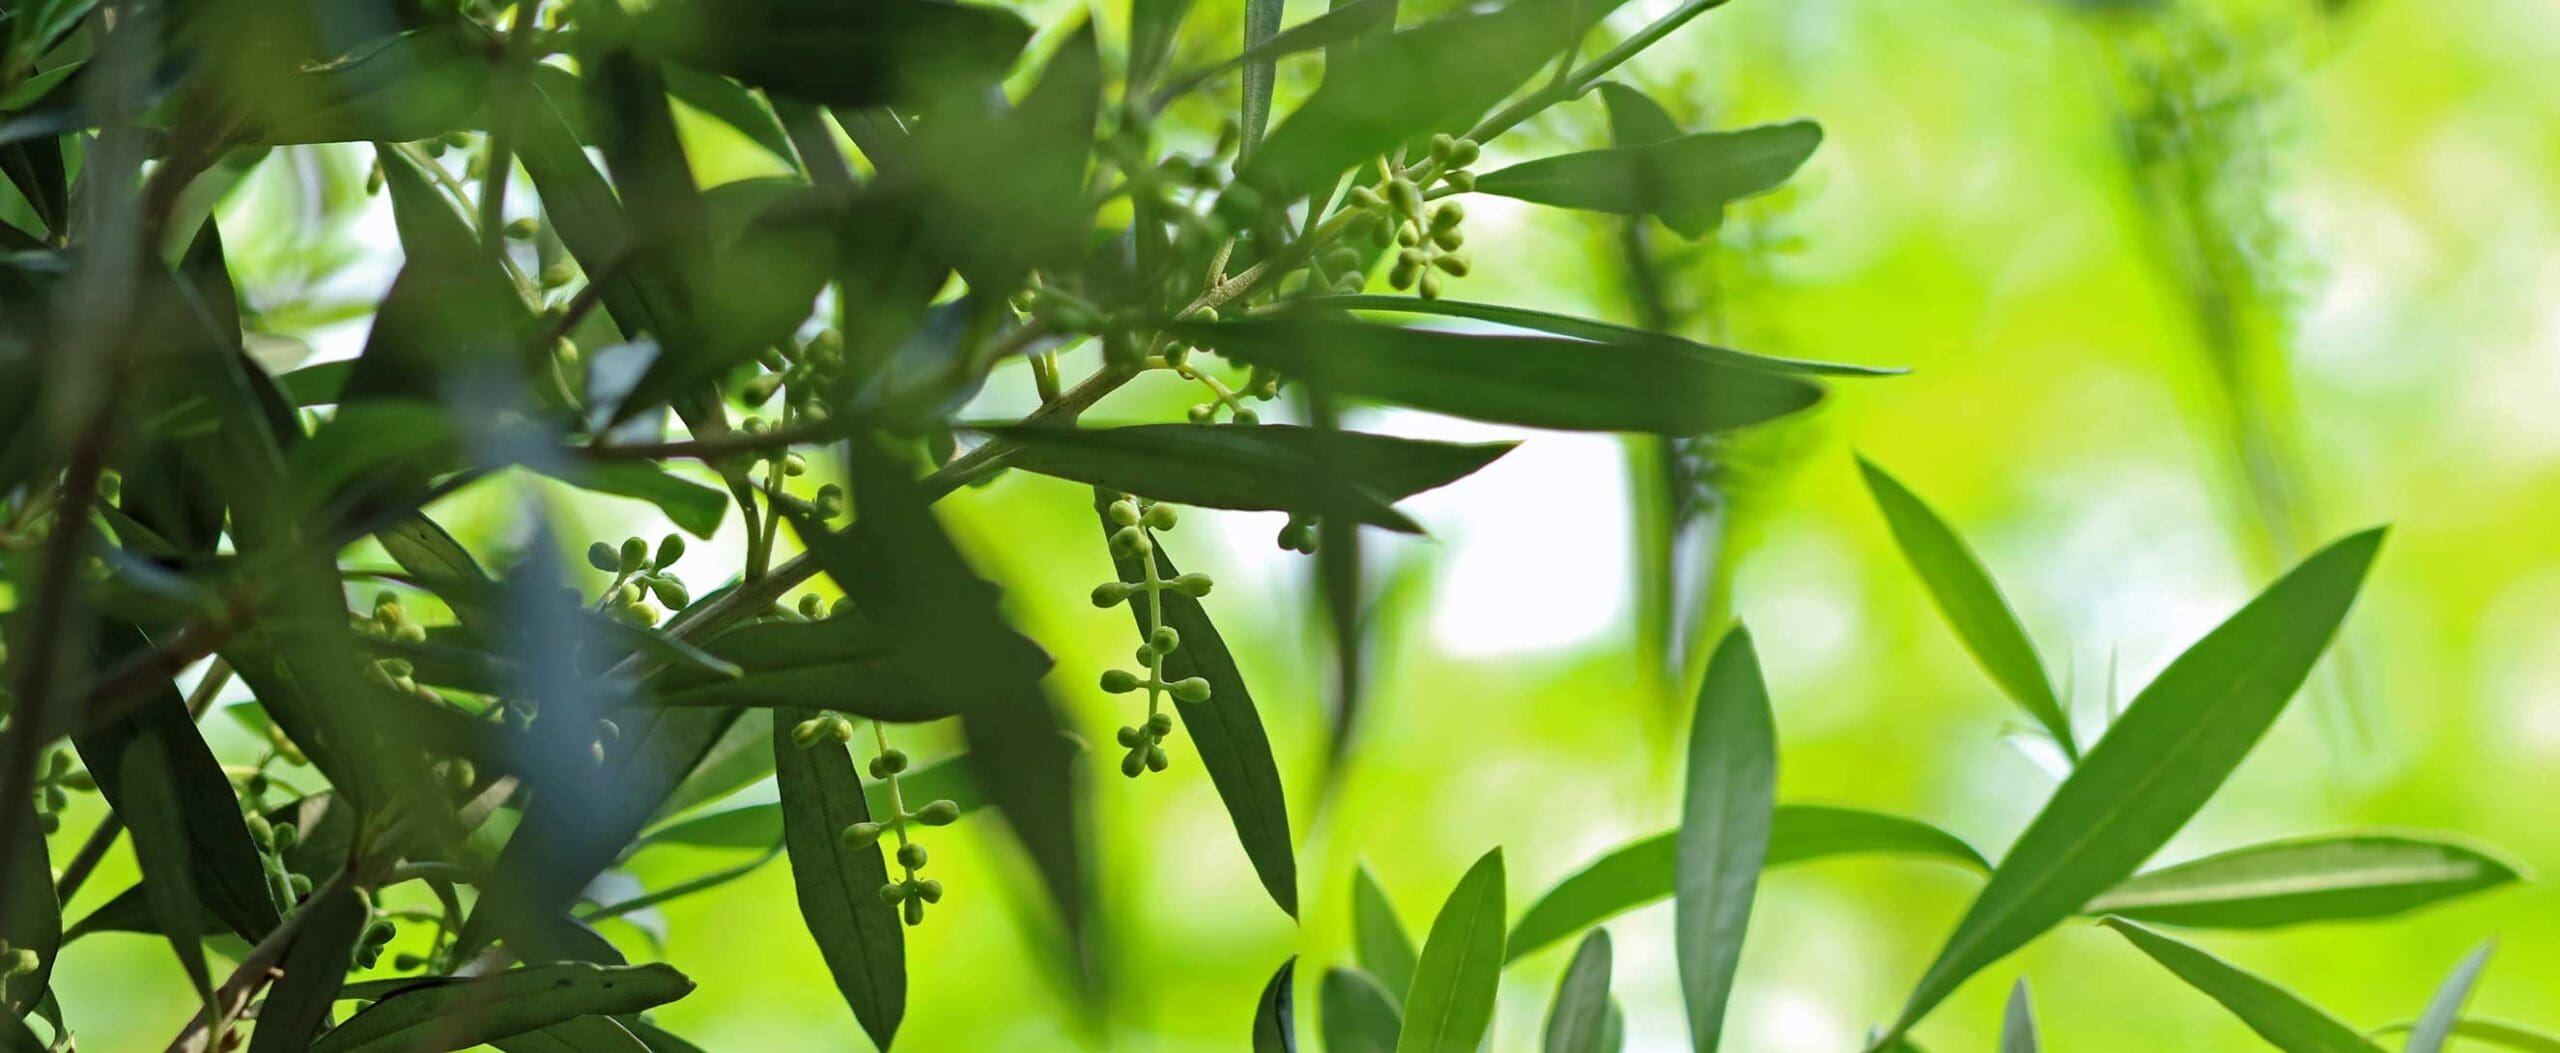 patenschaft bio olivenbaum italien olivenblueten scaled 1